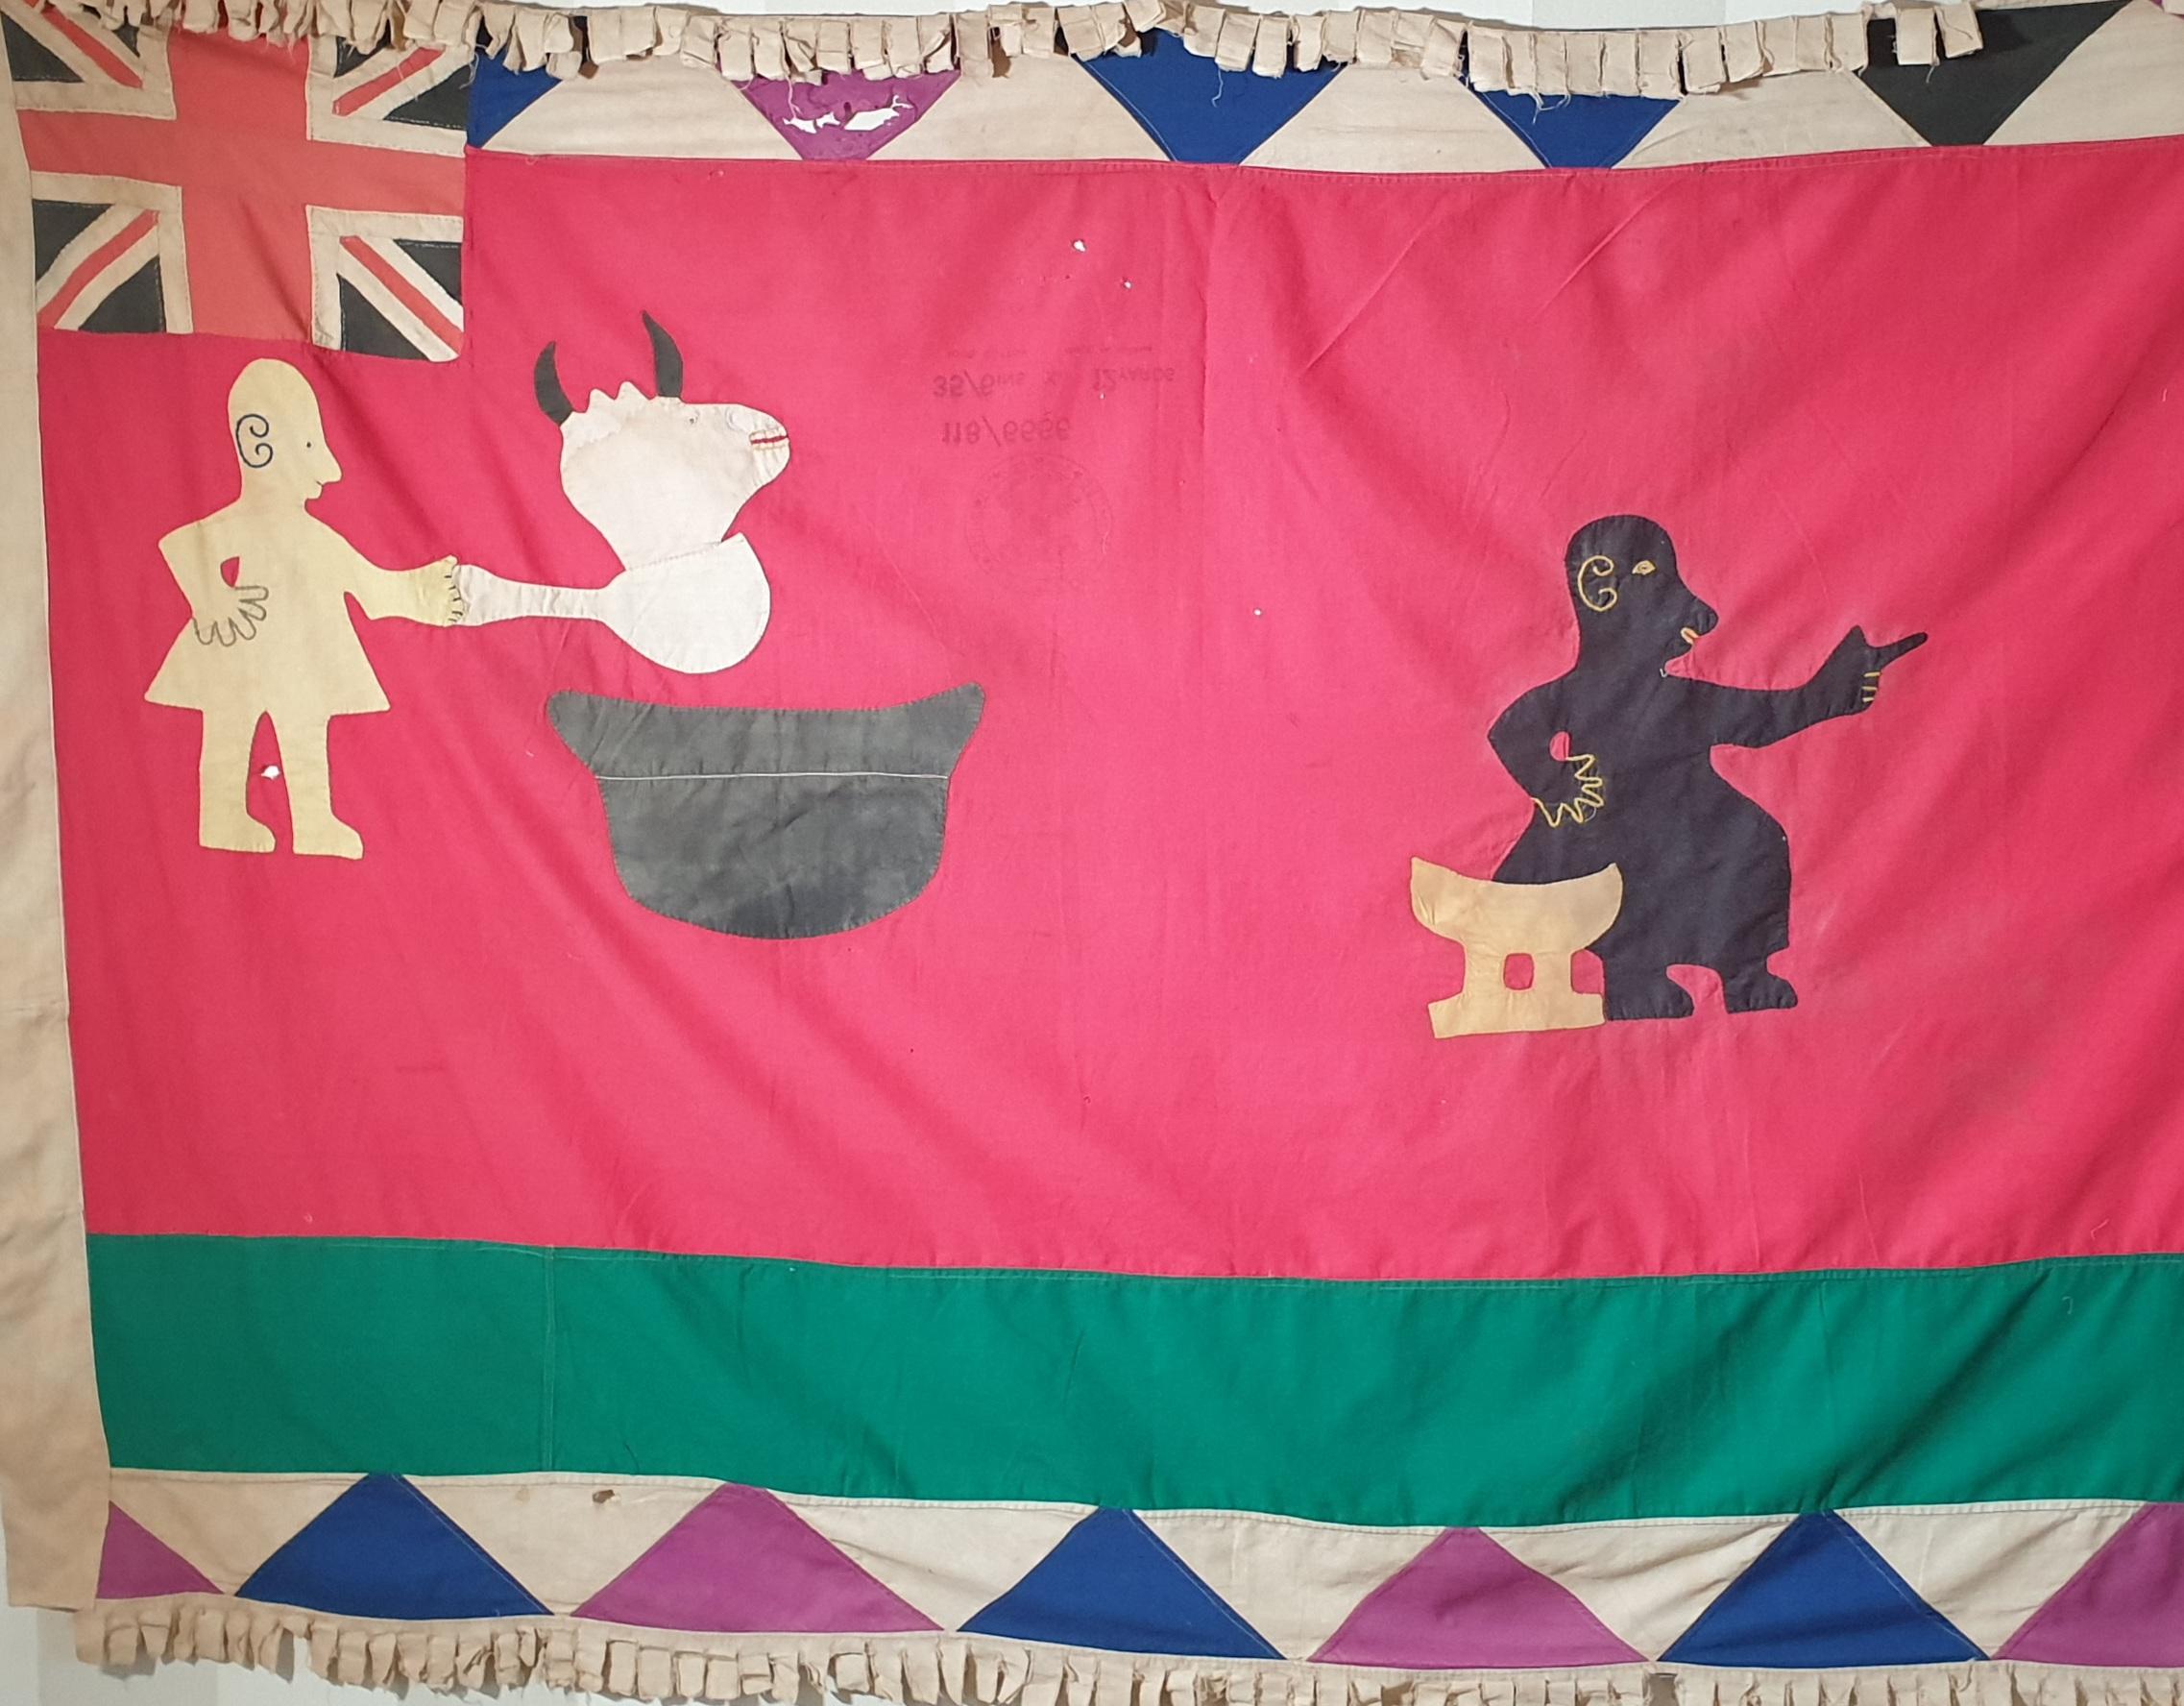 Asafo-Banner (Ghanaisch) im Angebot